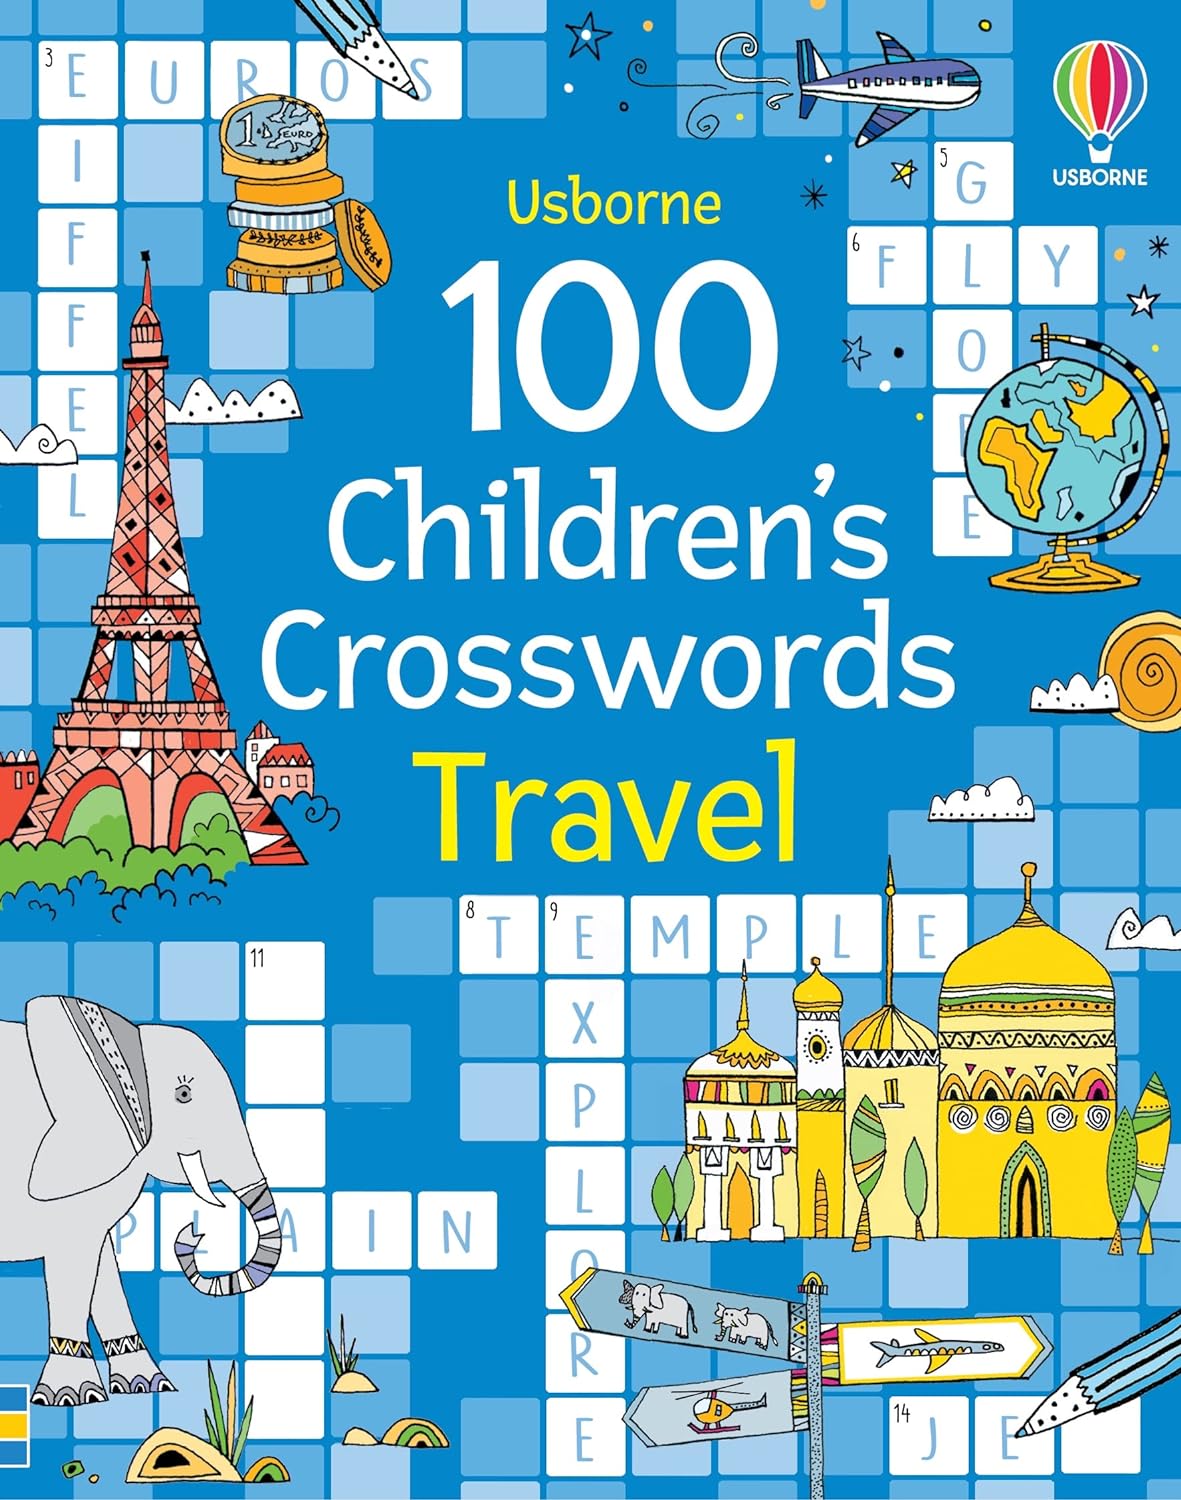 Usborne 100 Children's Crosswords Travel